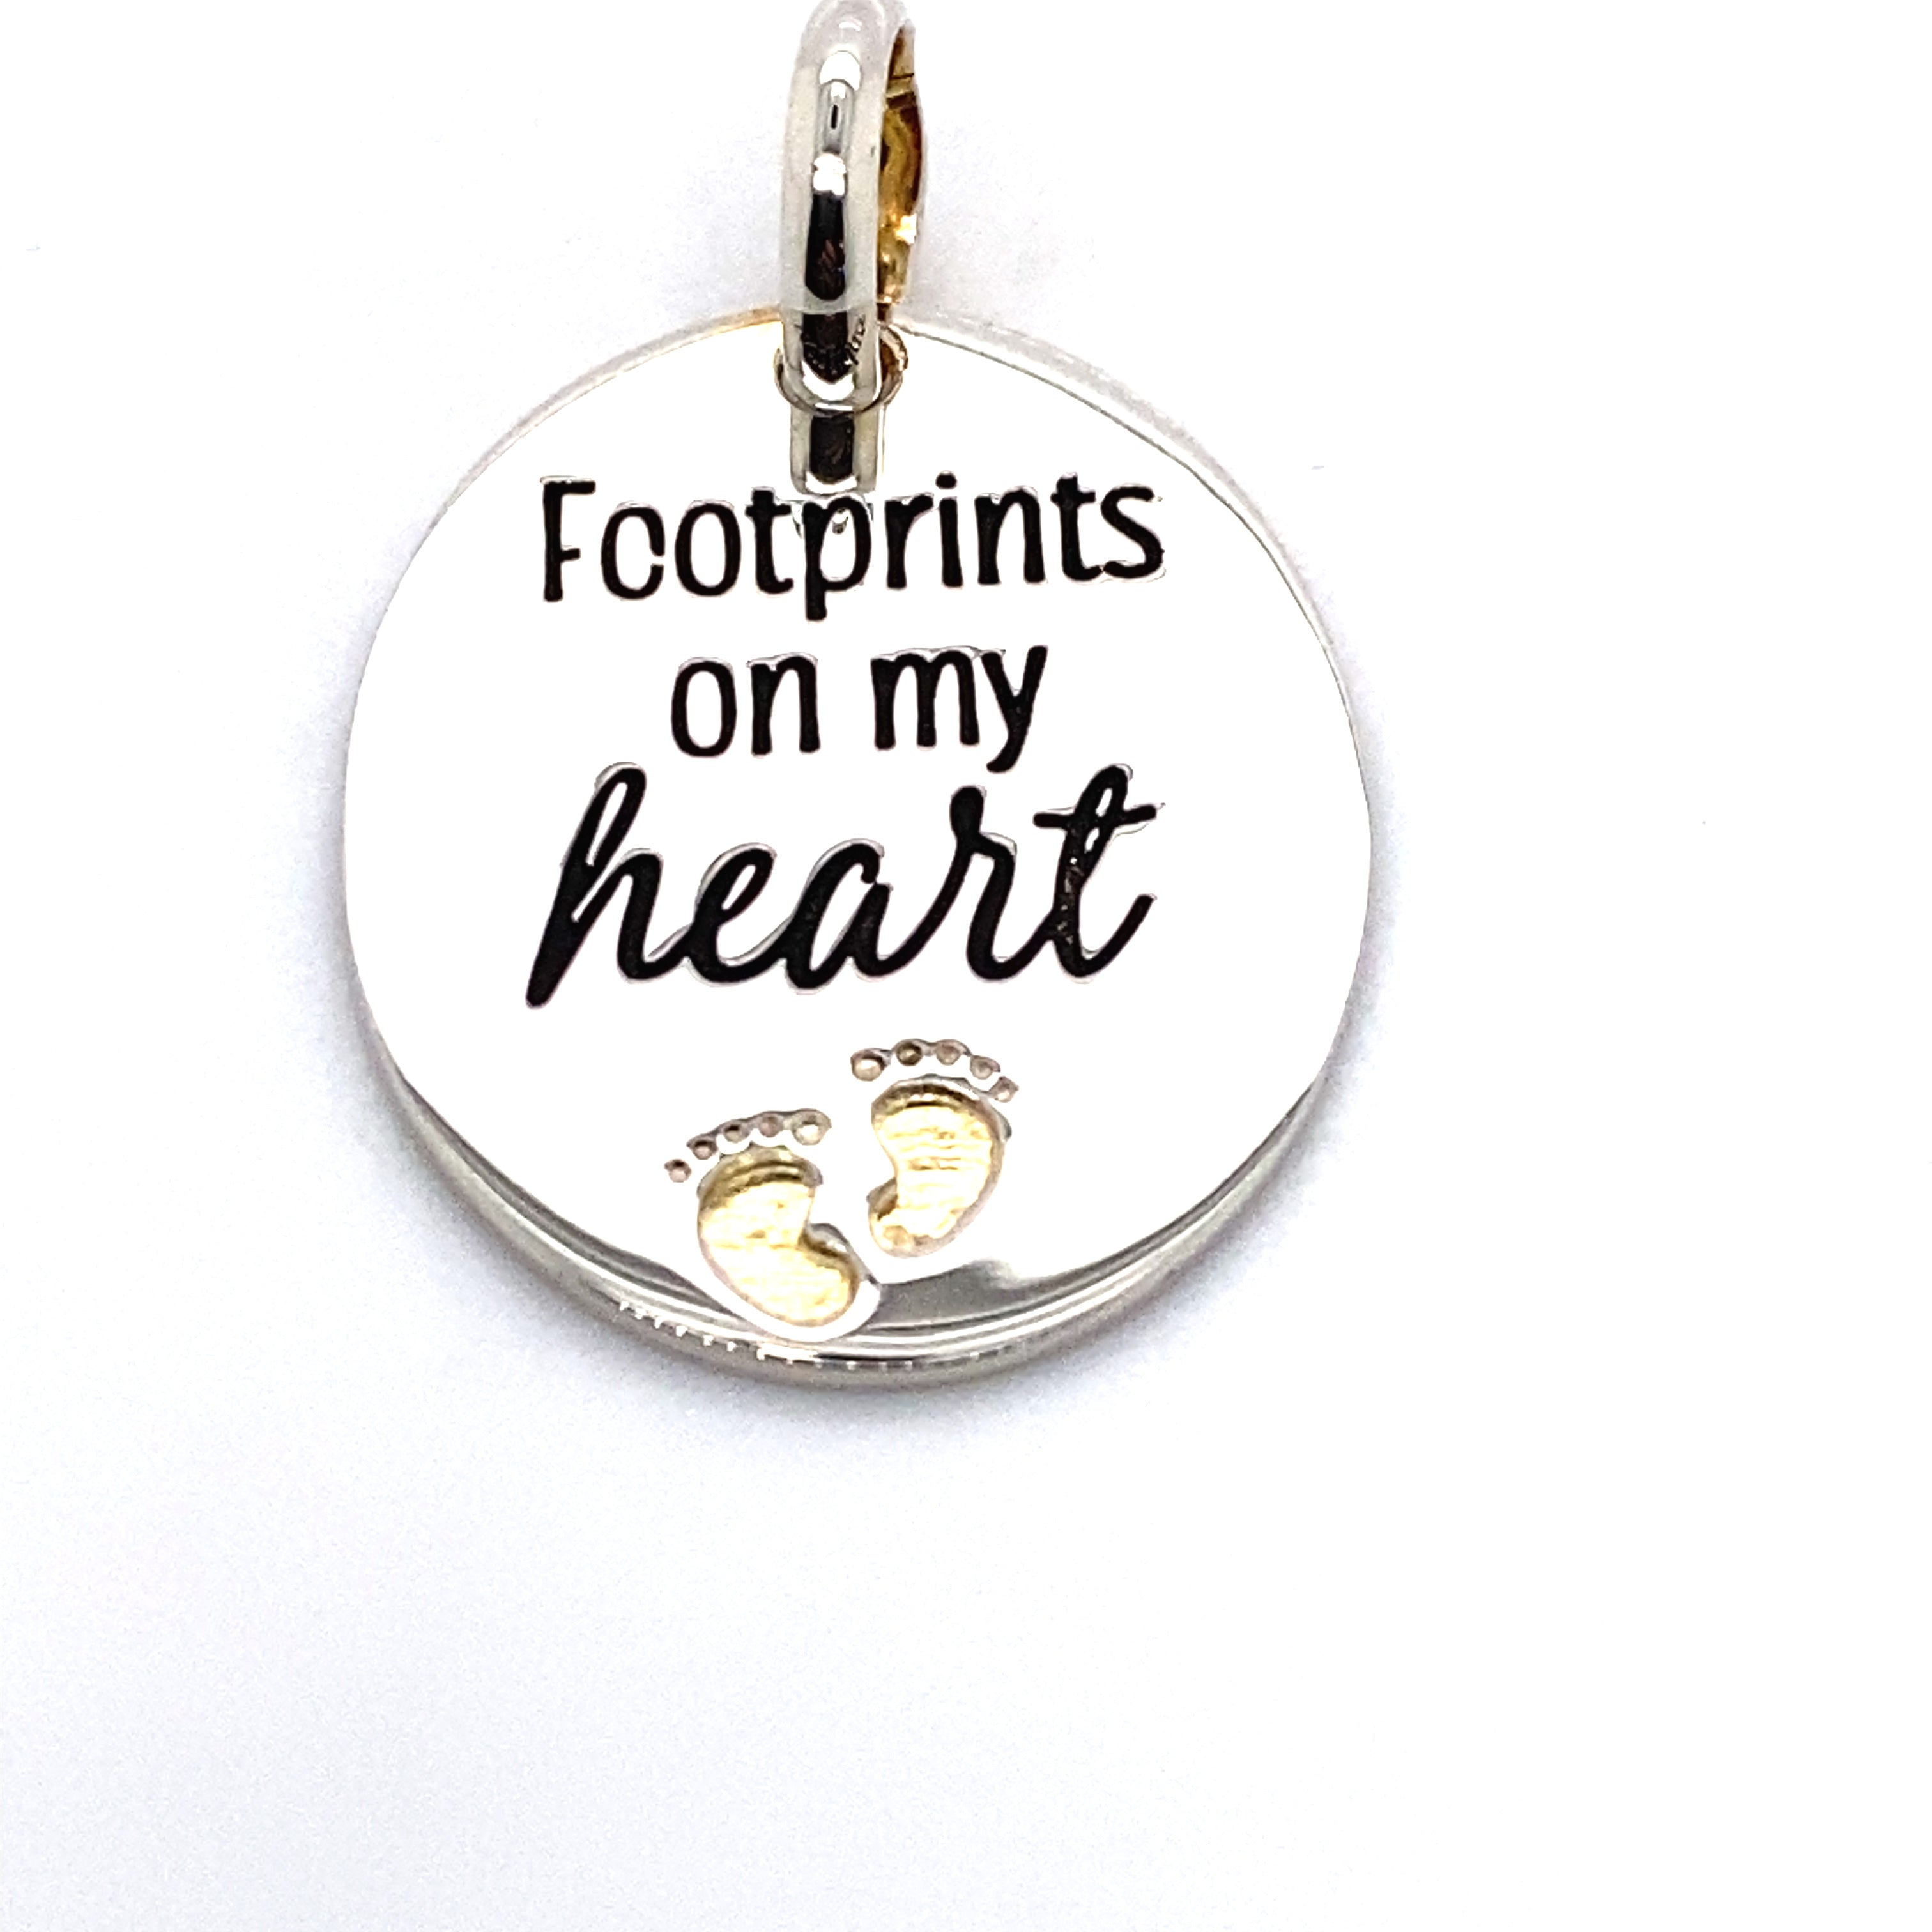 footprints on my heart pendant charm